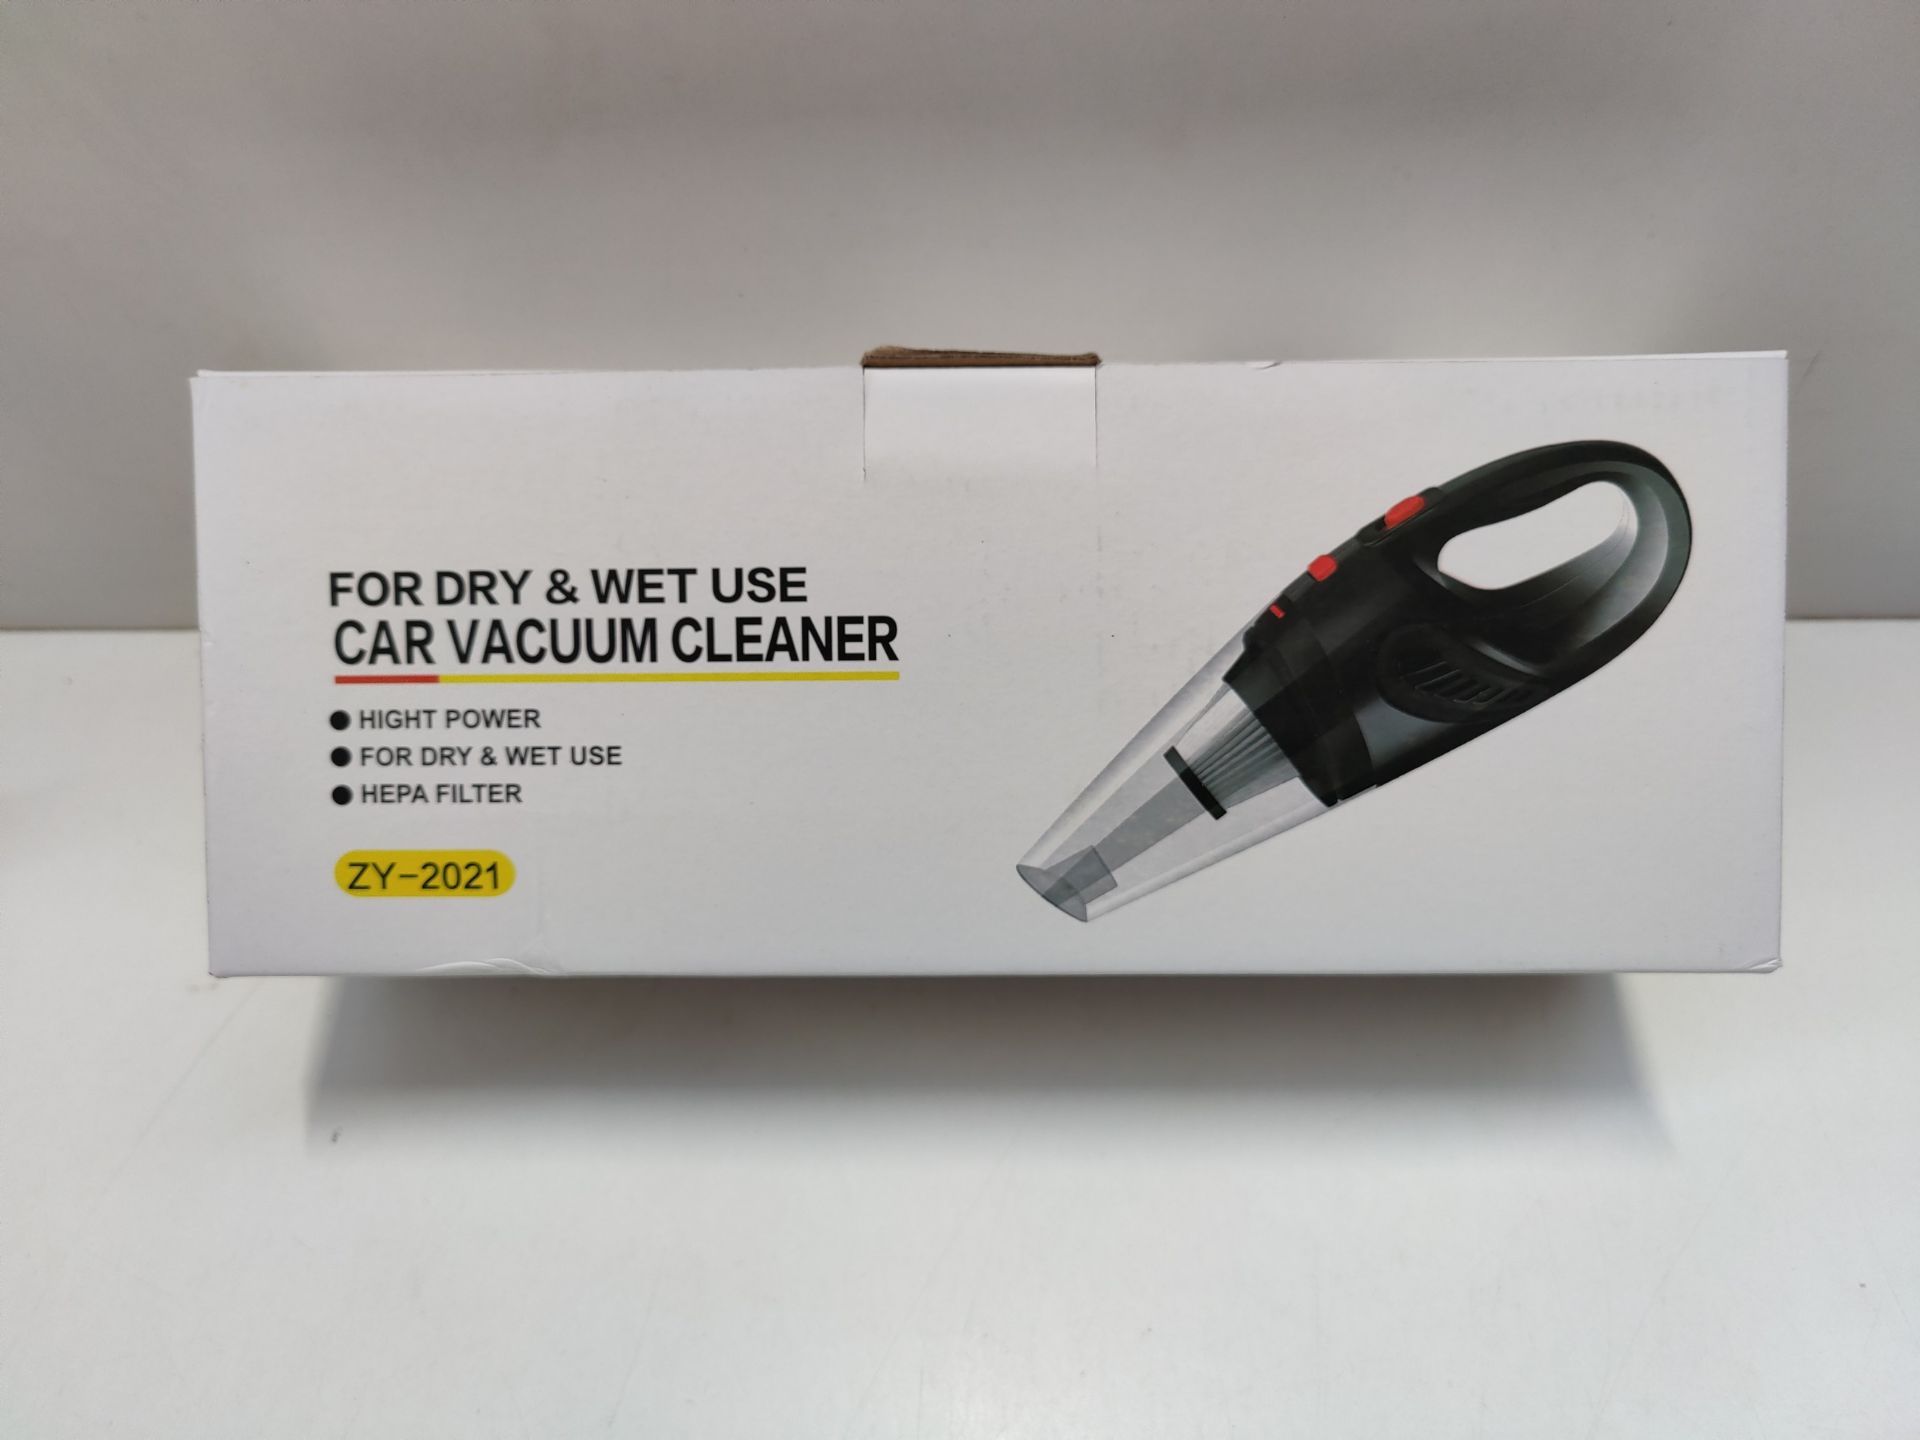 RRP £30.14 UXWEN Handheld Vacuum Cleaner Cordless - Image 2 of 2